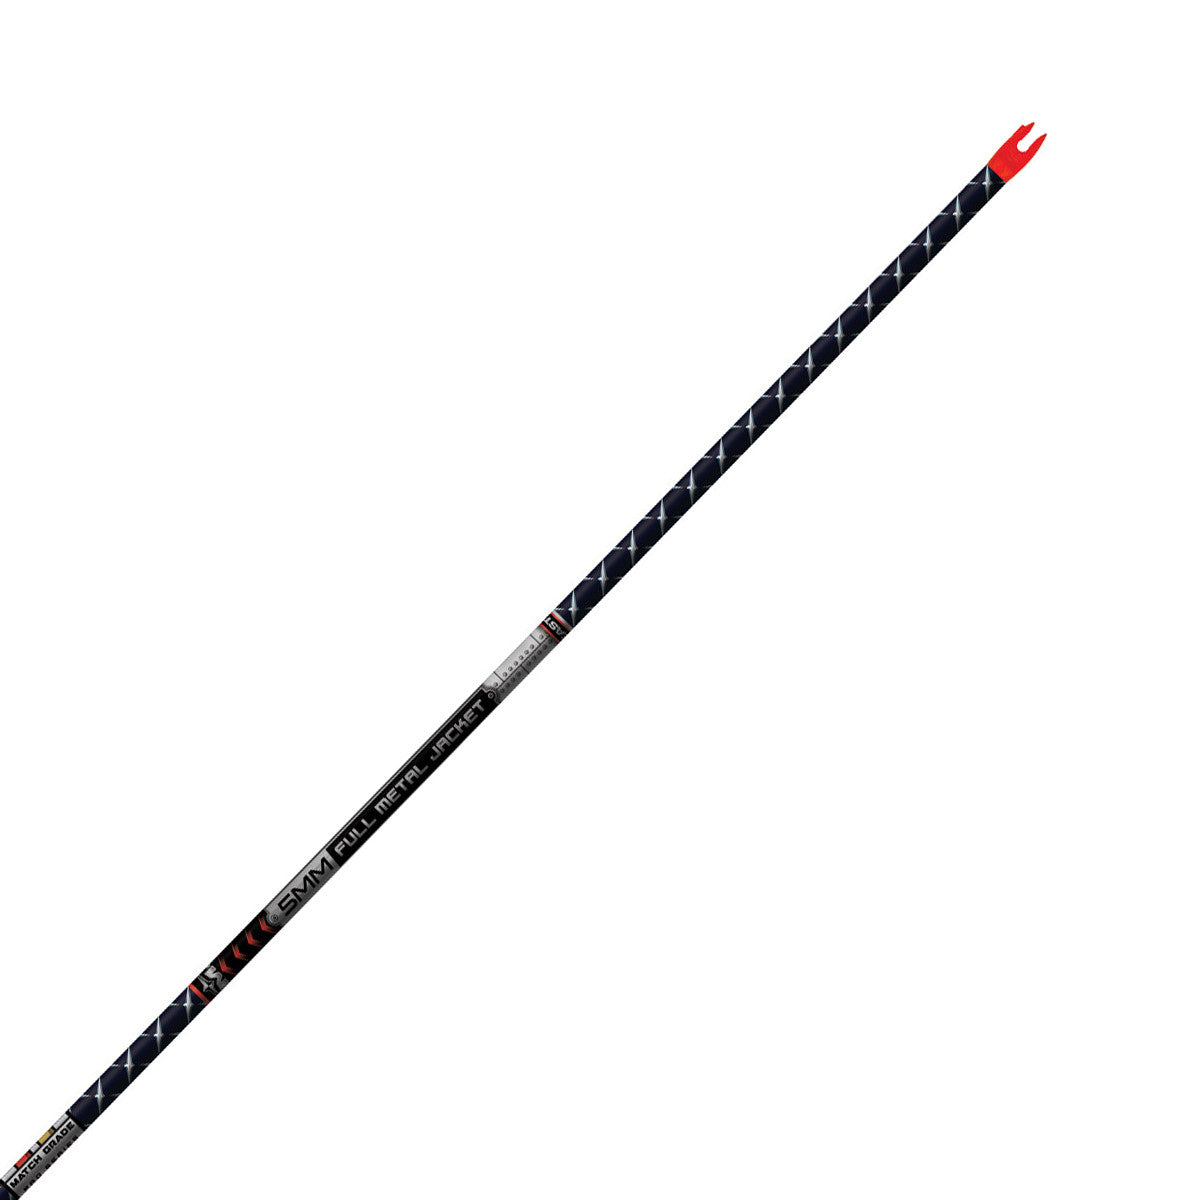 Easton 5mm FMJ Pro Series Match Grade Arrow Shafts - 12 Count in Easton 5mm FMJ Pro Series Match Grade Arrow Shafts - 12 Count by Easton | Archery - goHUNT Shop by GOHUNT | Easton - GOHUNT Shop